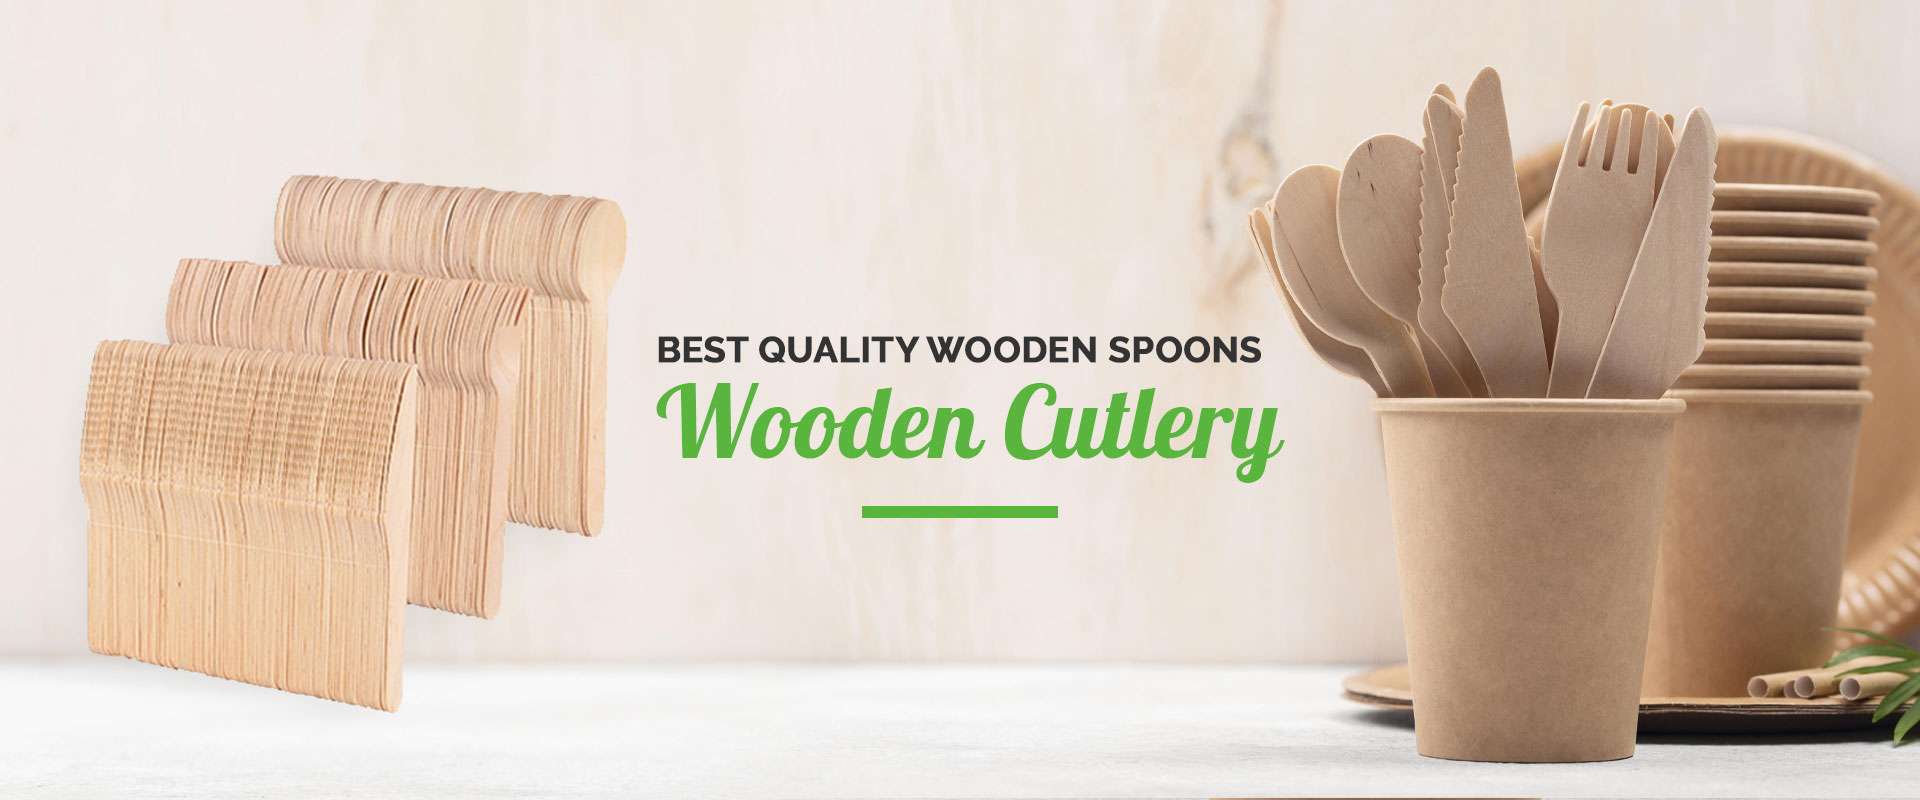  Wooden Cutlery Manufacturers in Vietnam